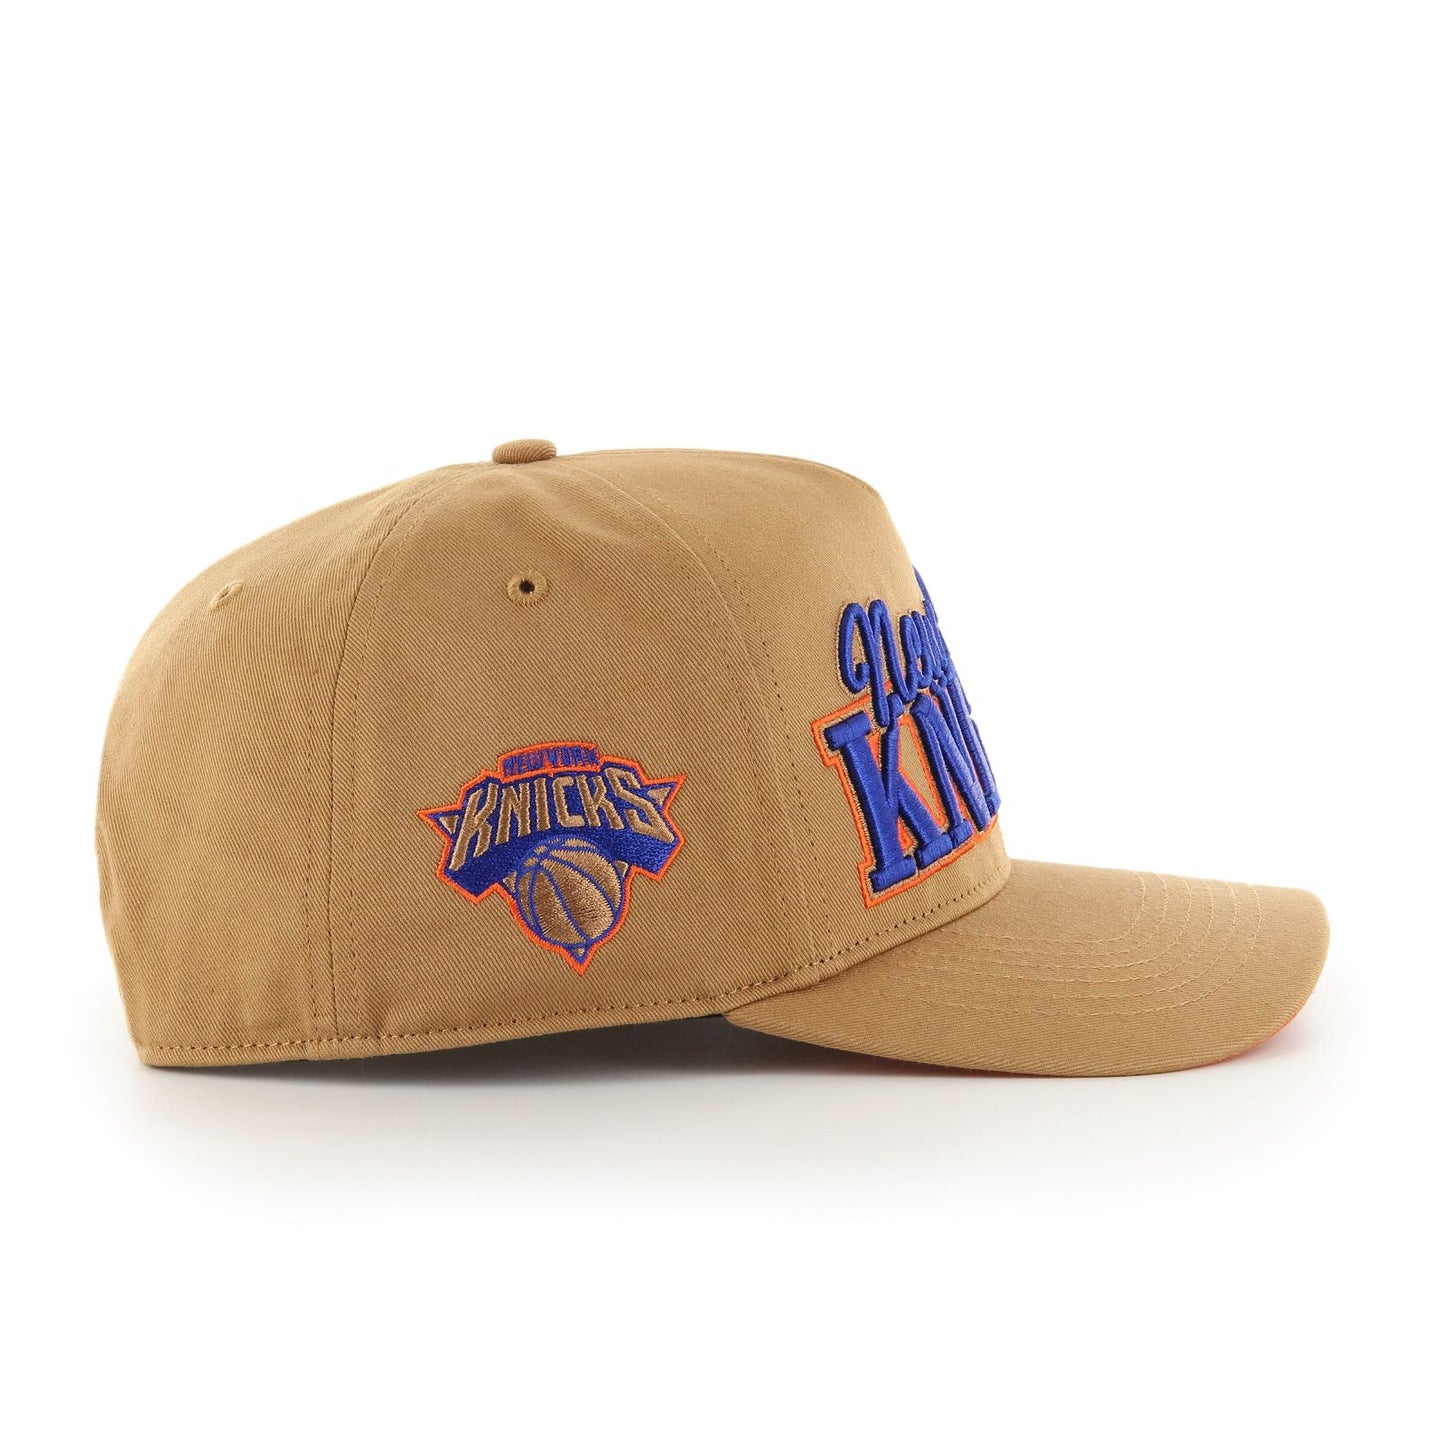 '47 Brand Knicks Camel Barnes Hitch Snapback - Side View